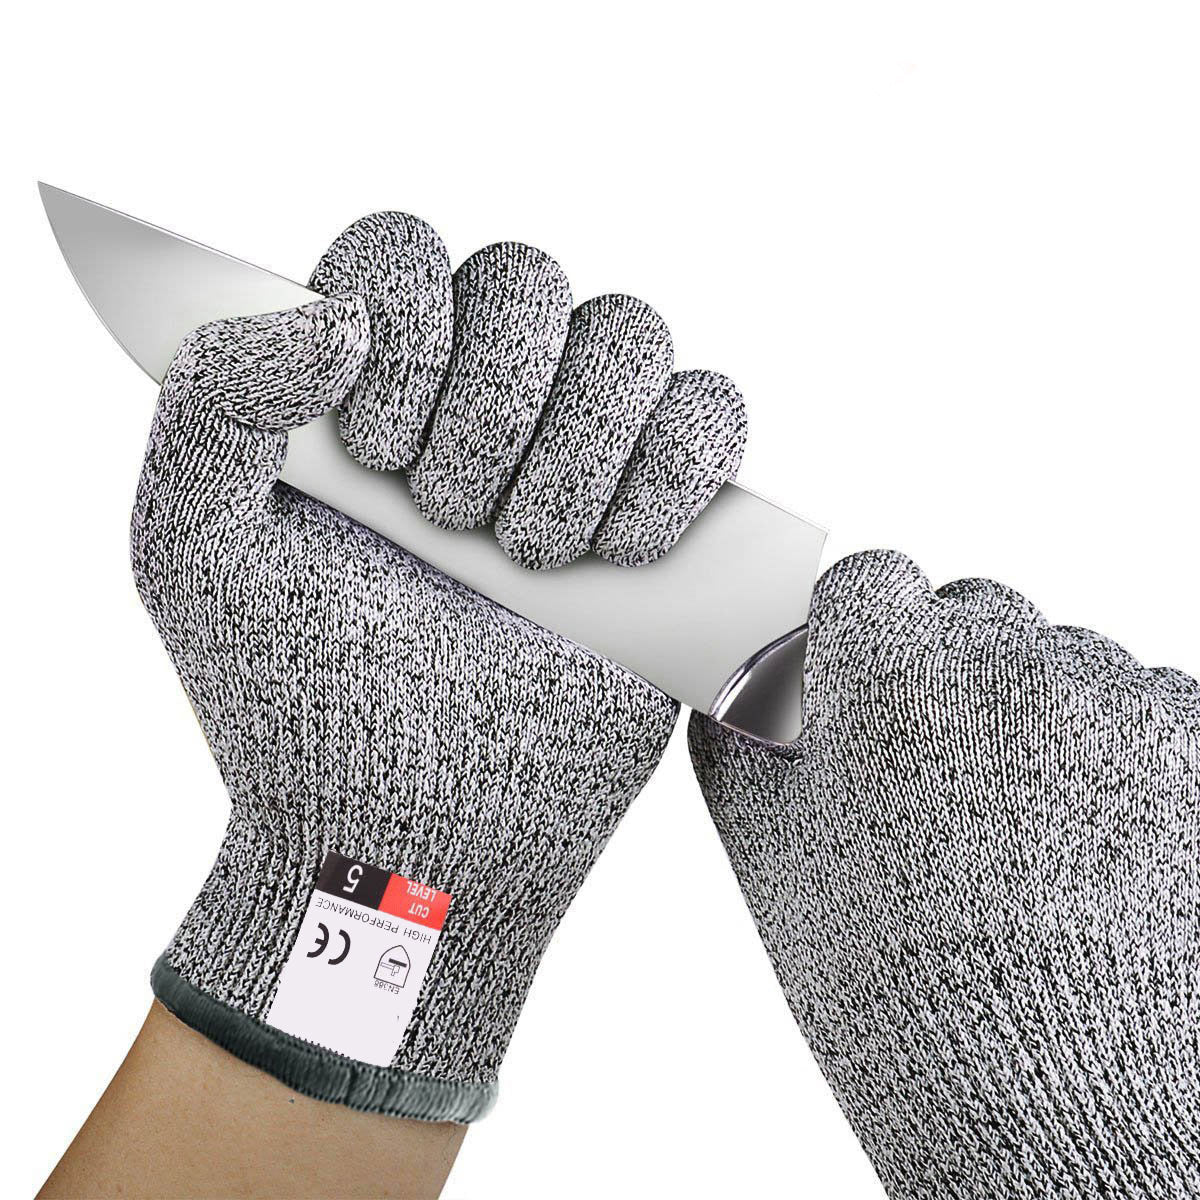 Cut-proof gloves Food grade kitchen garden gardening gloves slaughter fishing gloves